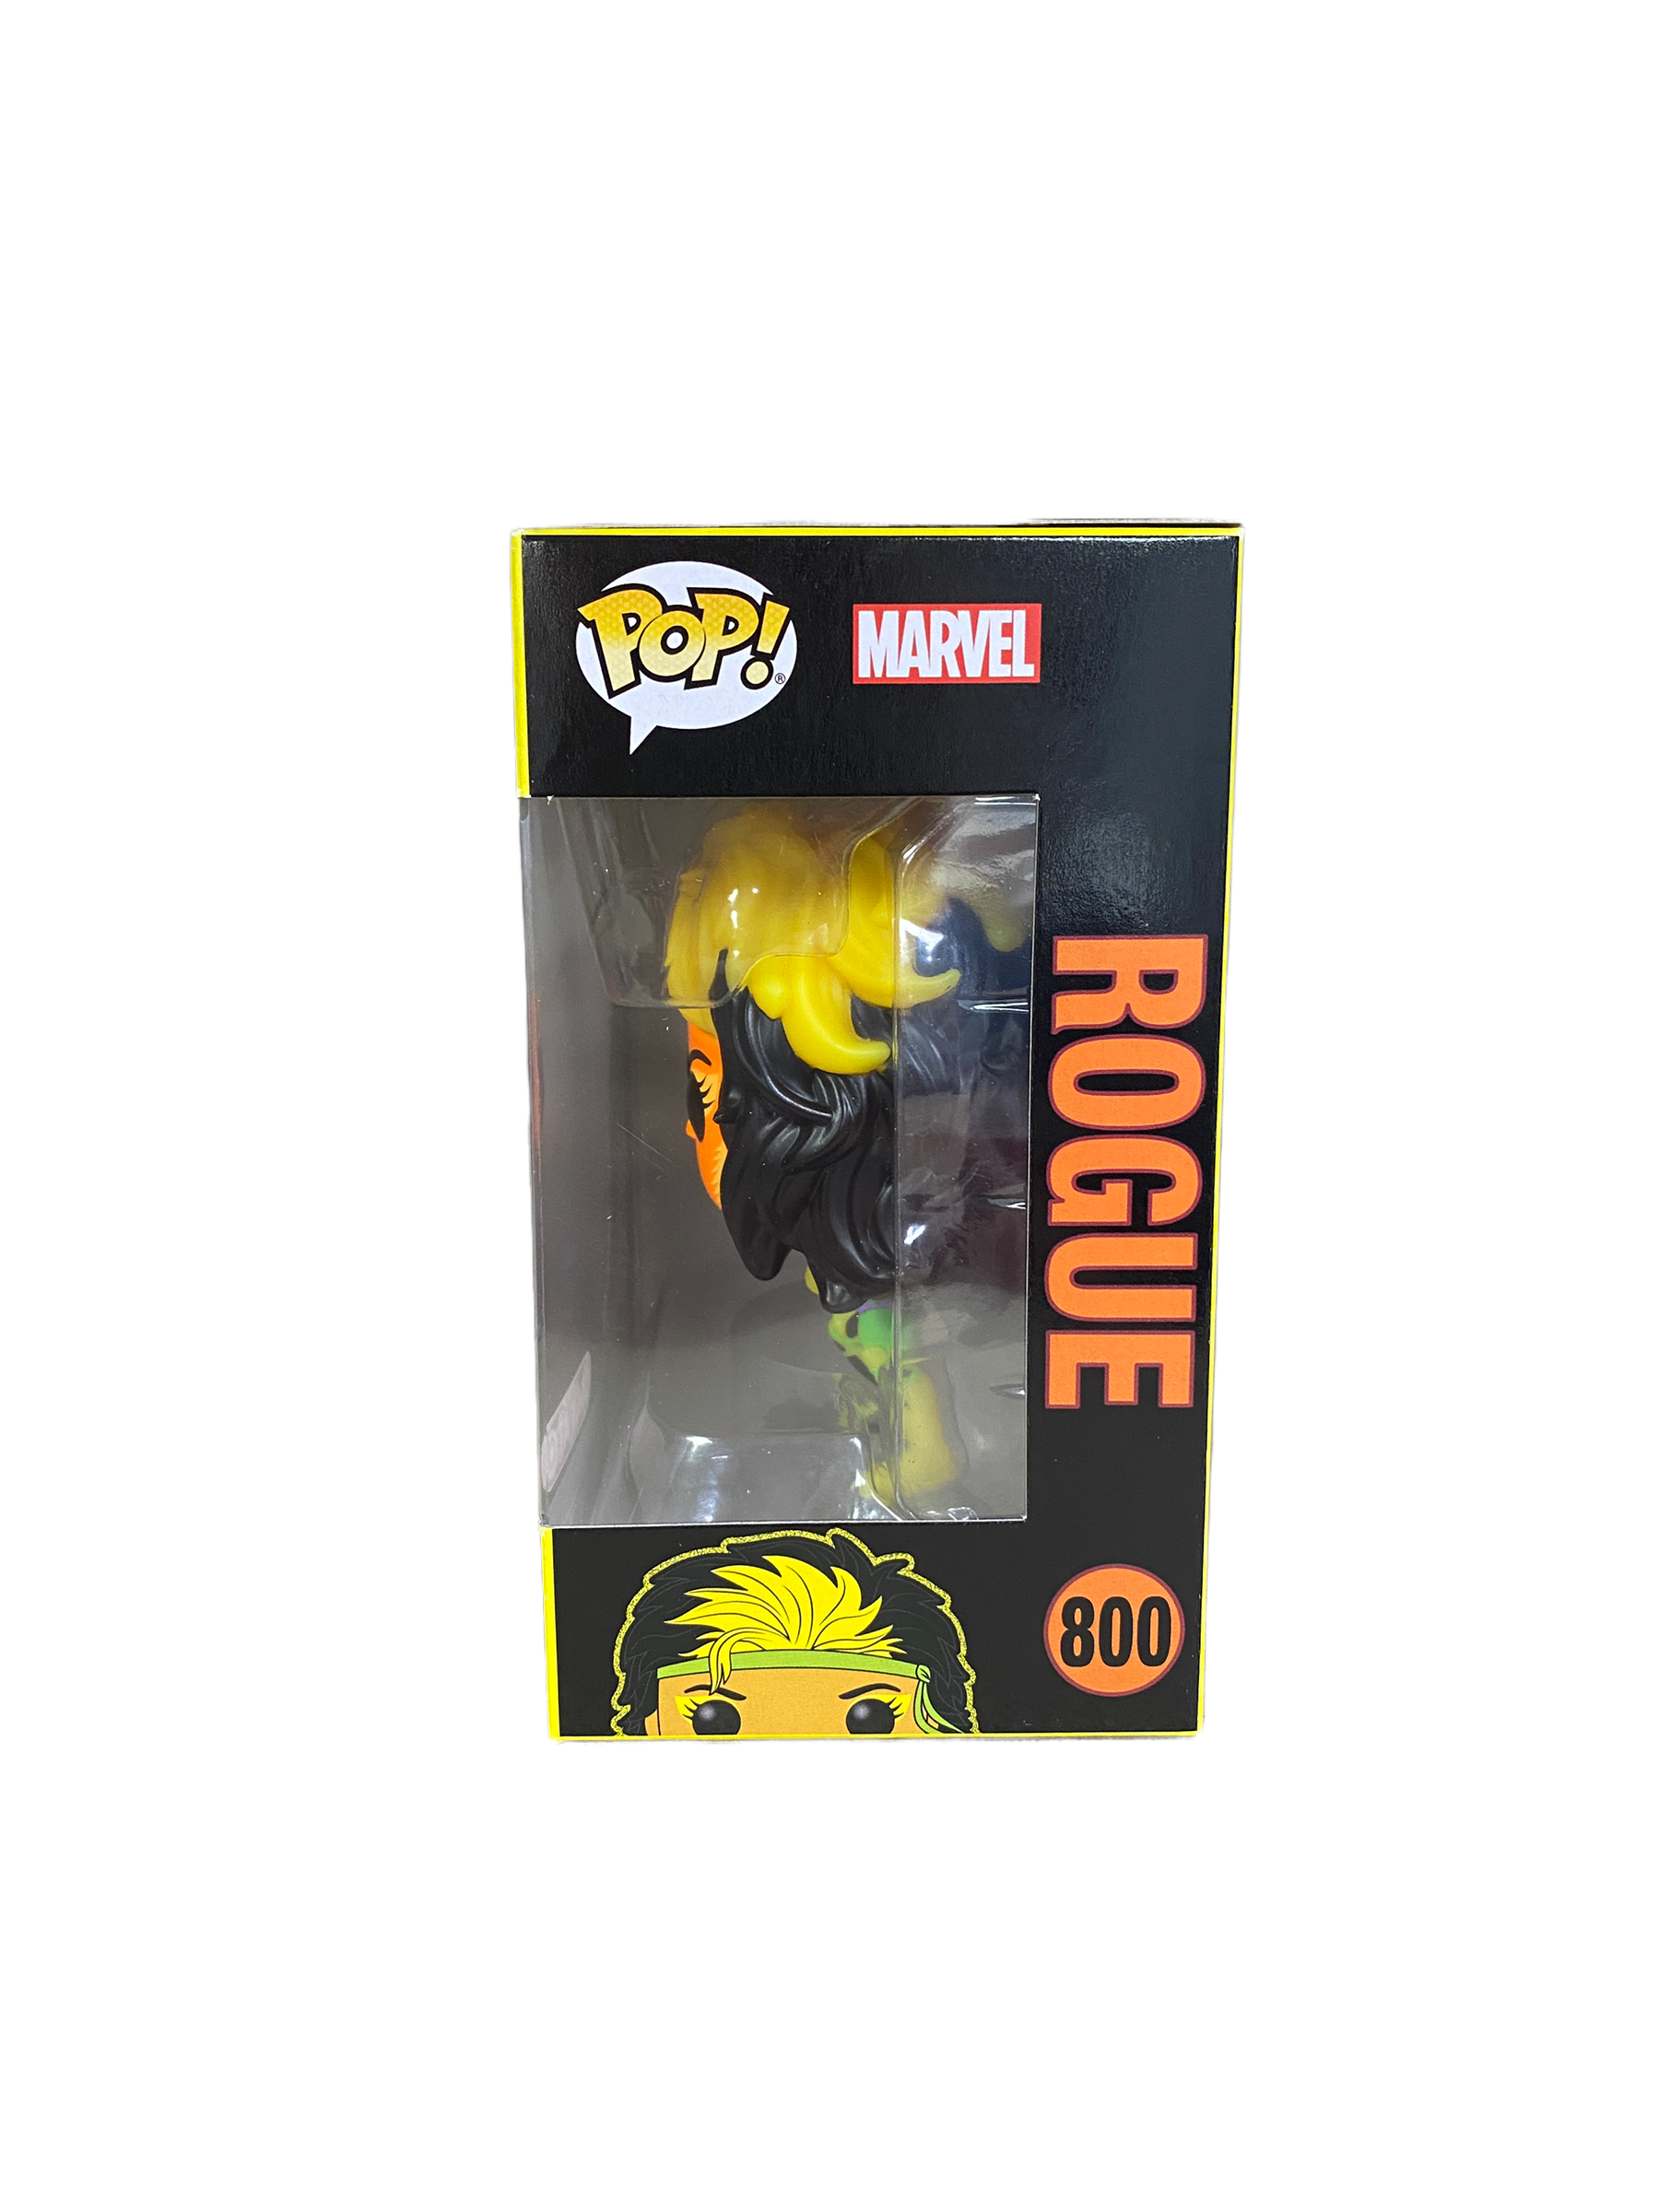 Rogue #800 (Blacklight) Funko Pop! - Marvel - Target Exclusive - Condition 8.5/10